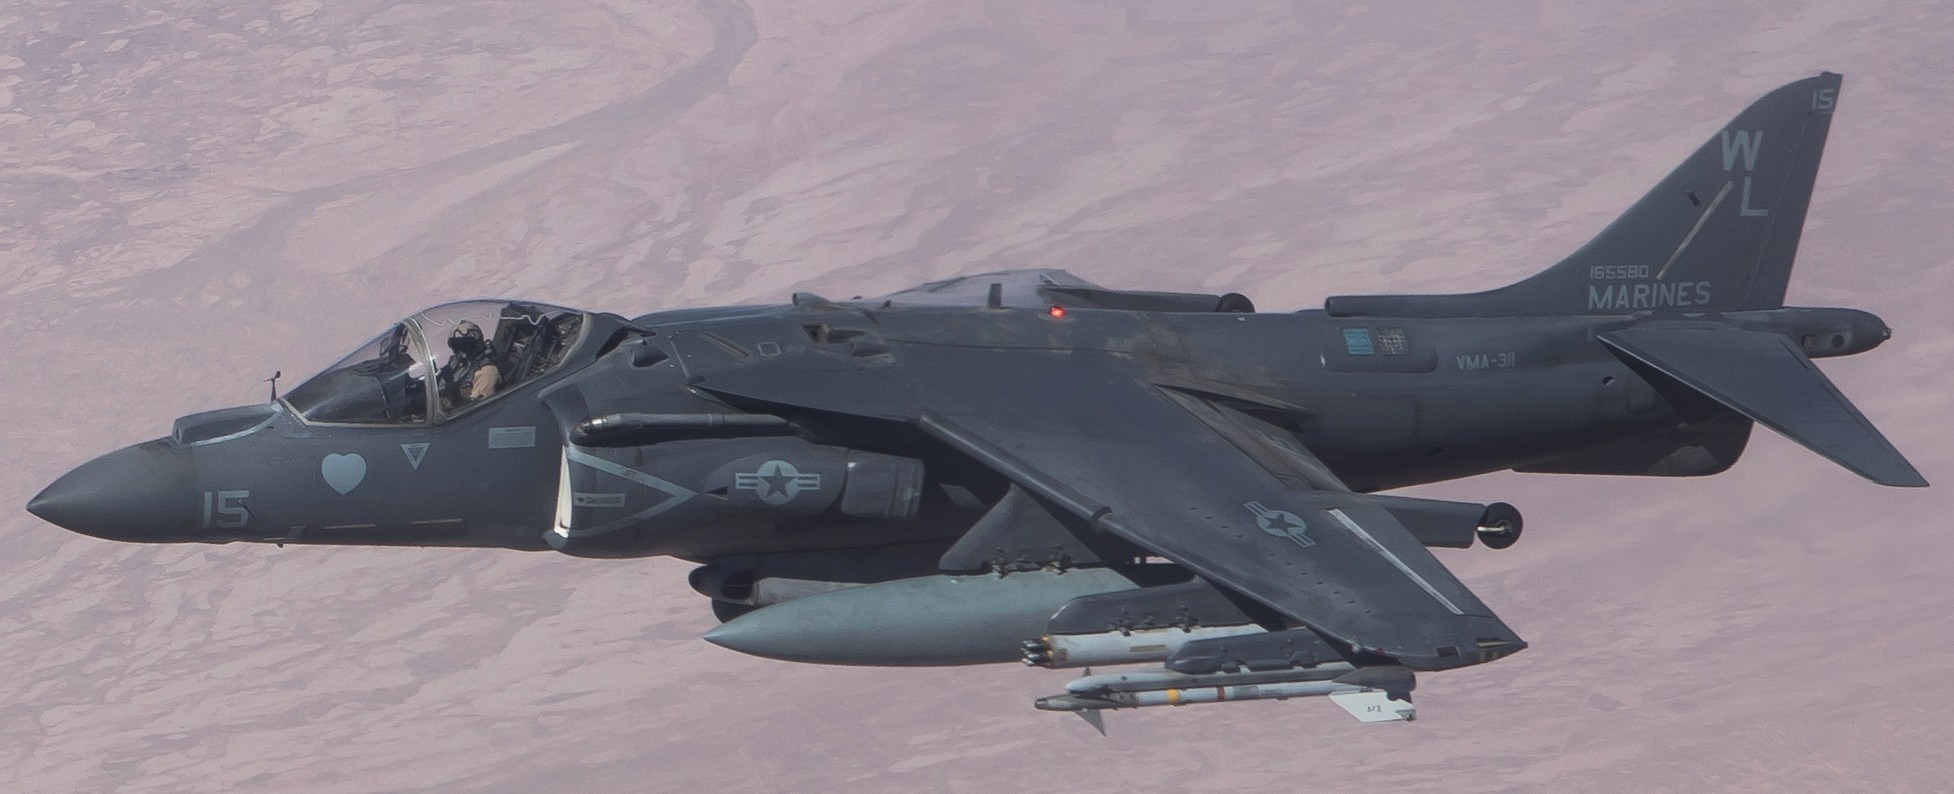 vma-311 tomcats marine attack squadron usmc av-8b harrier 195 kuwait